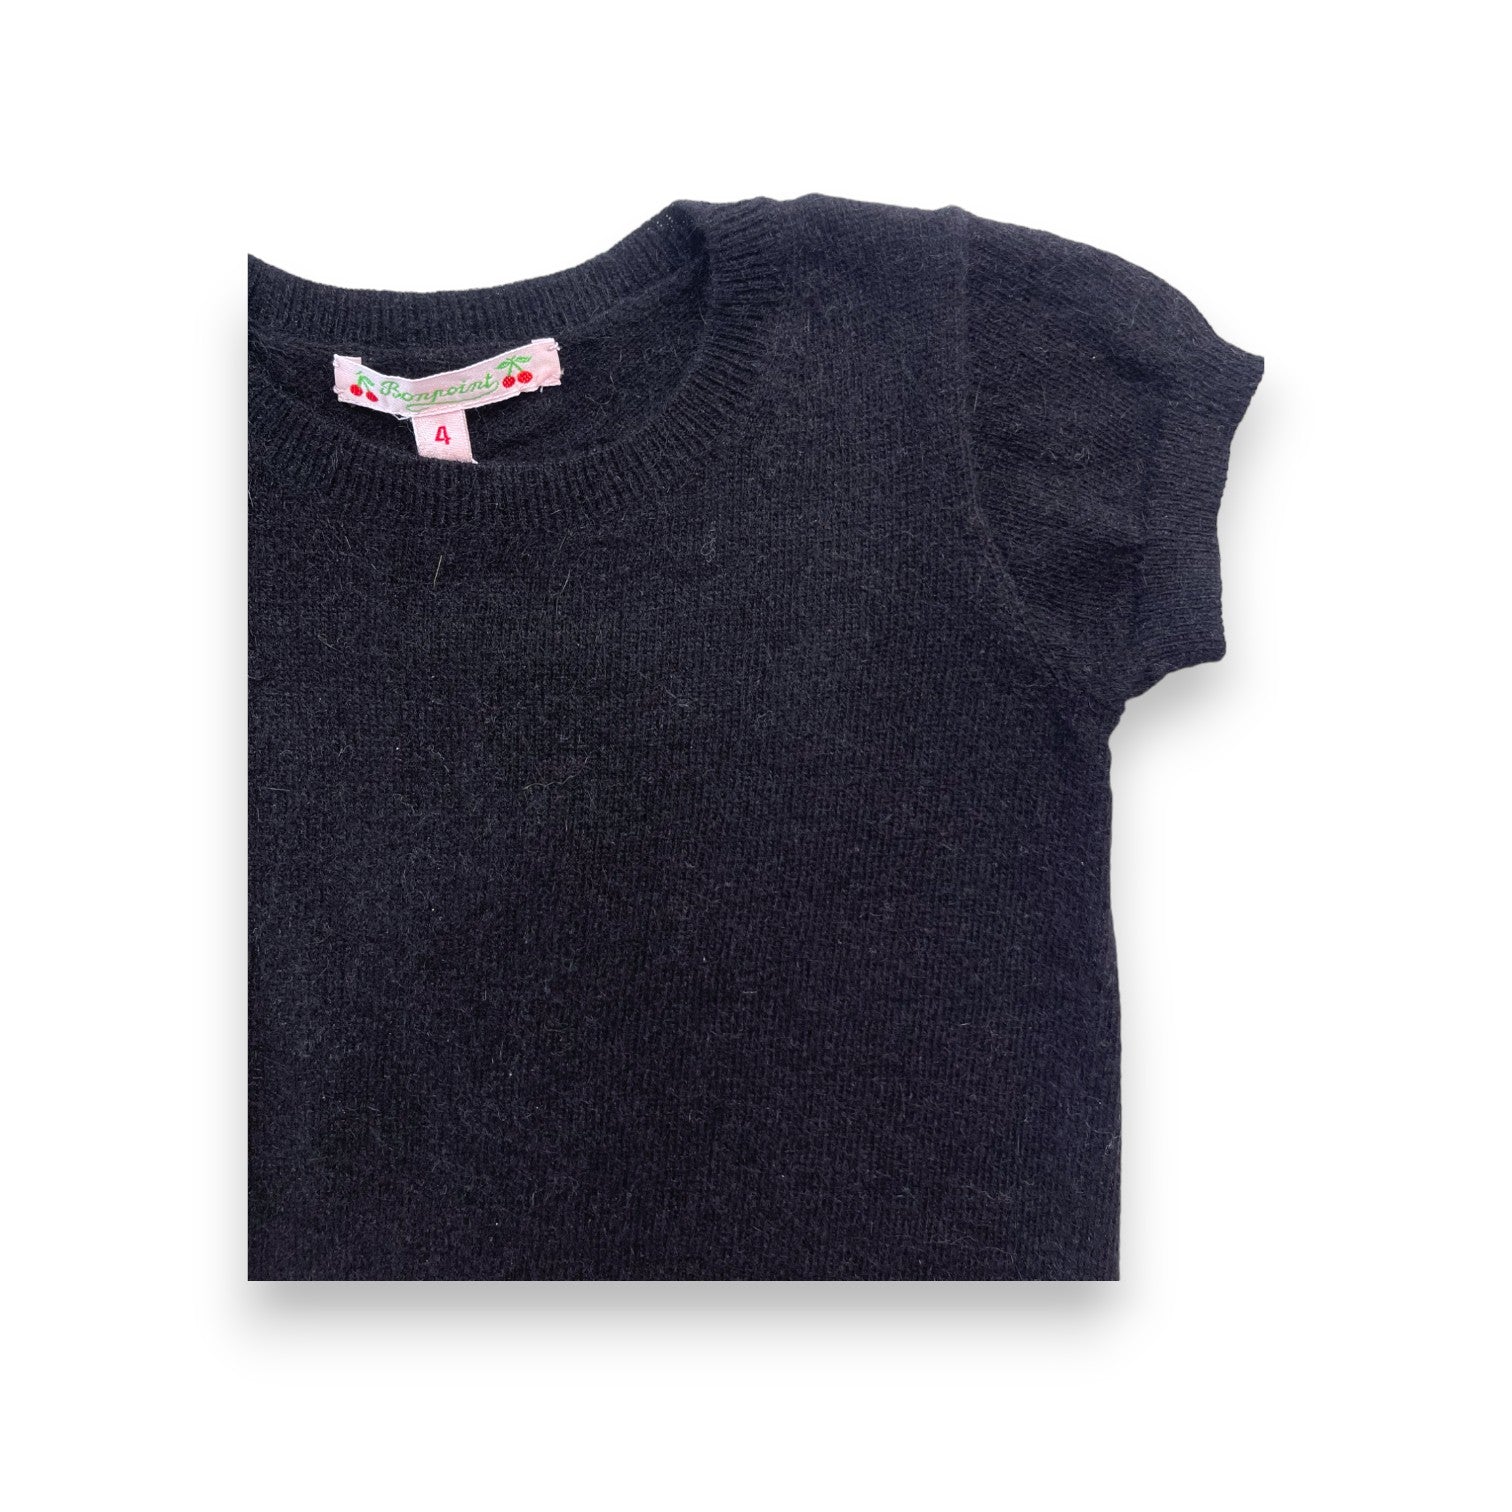 BONPOINT - T shirt pull noir (neuf) - 4 ans